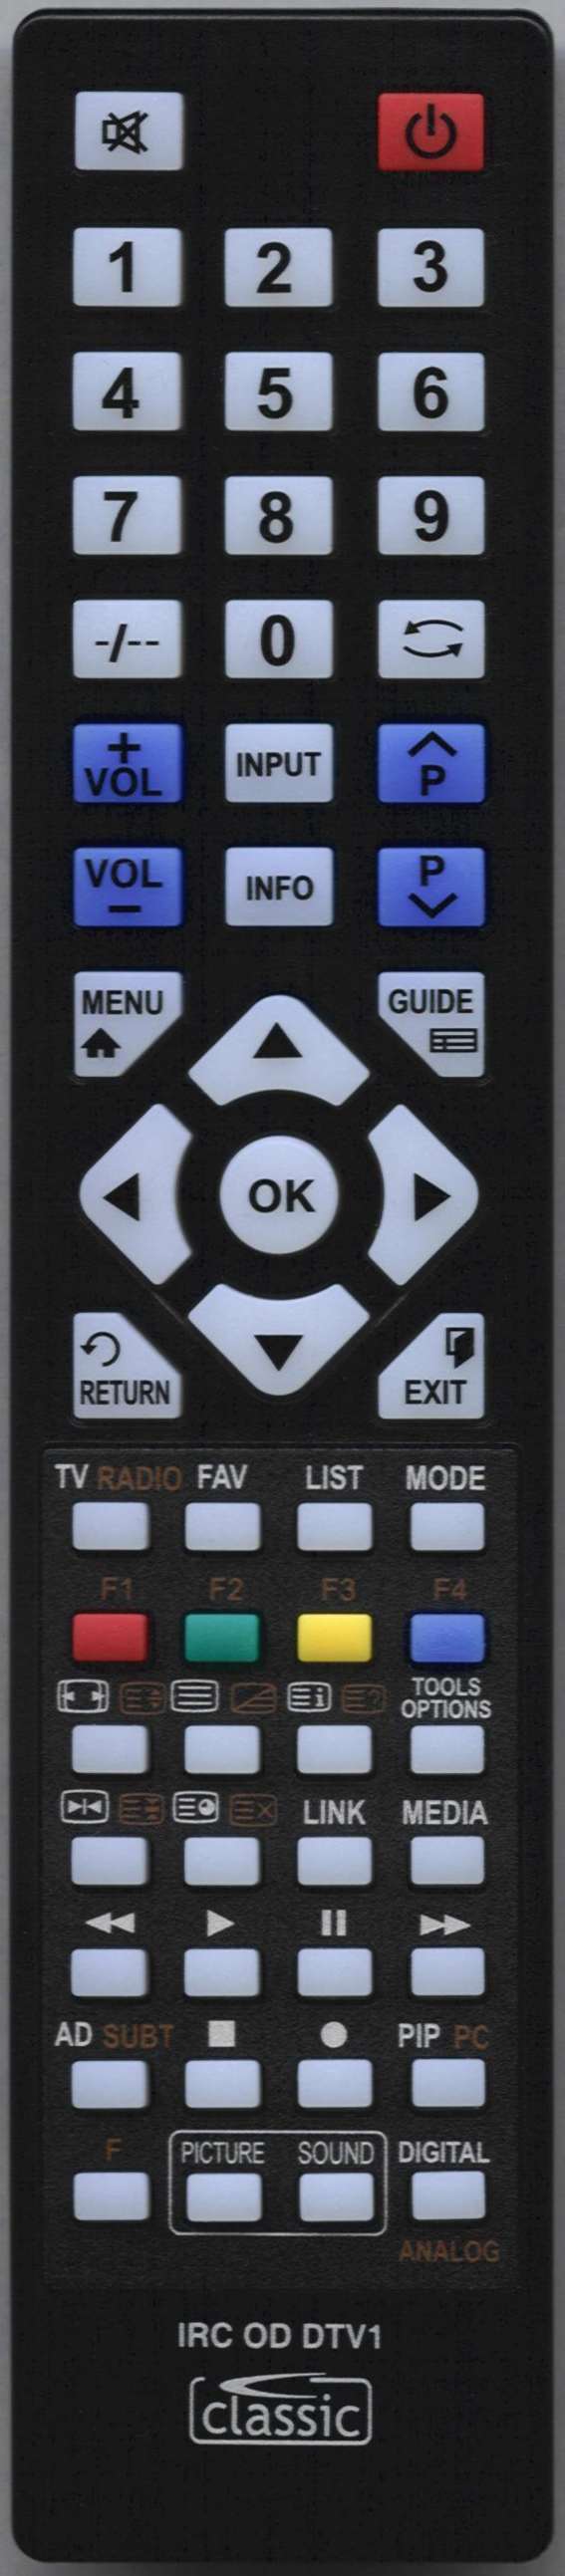 SEIKI SE32HY02UK Remote Control